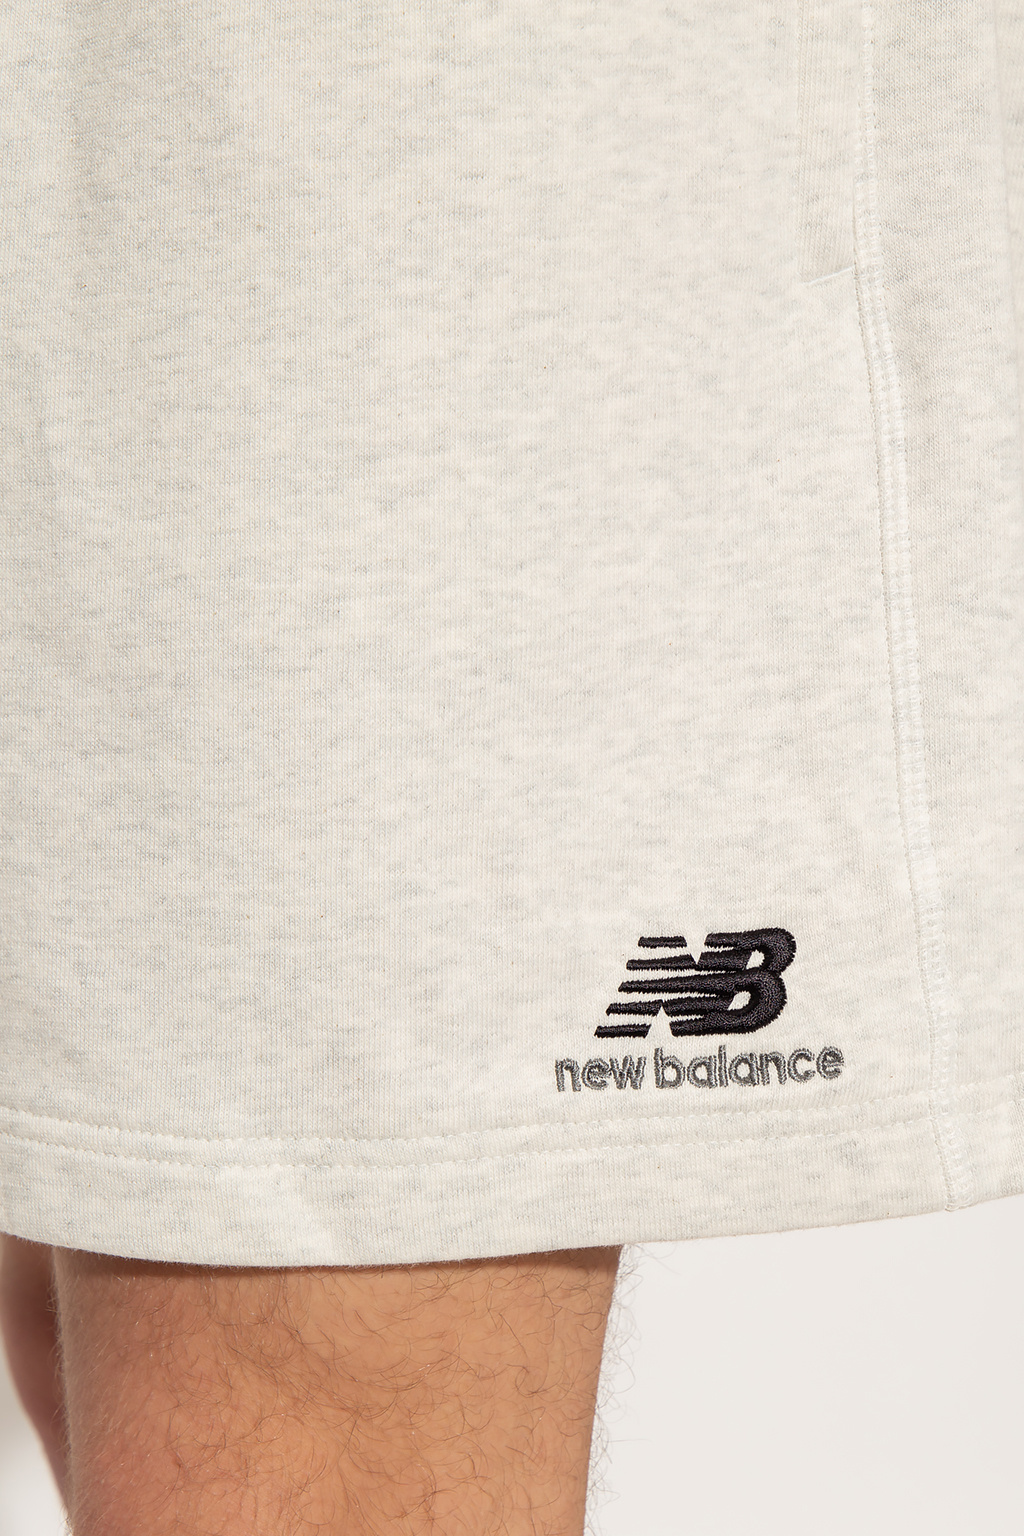 New Balance New Balance 997.5 GRAYWHITE Marathon Running Shoes Low Tops Wear-resistant Non-Slip ML997HDA